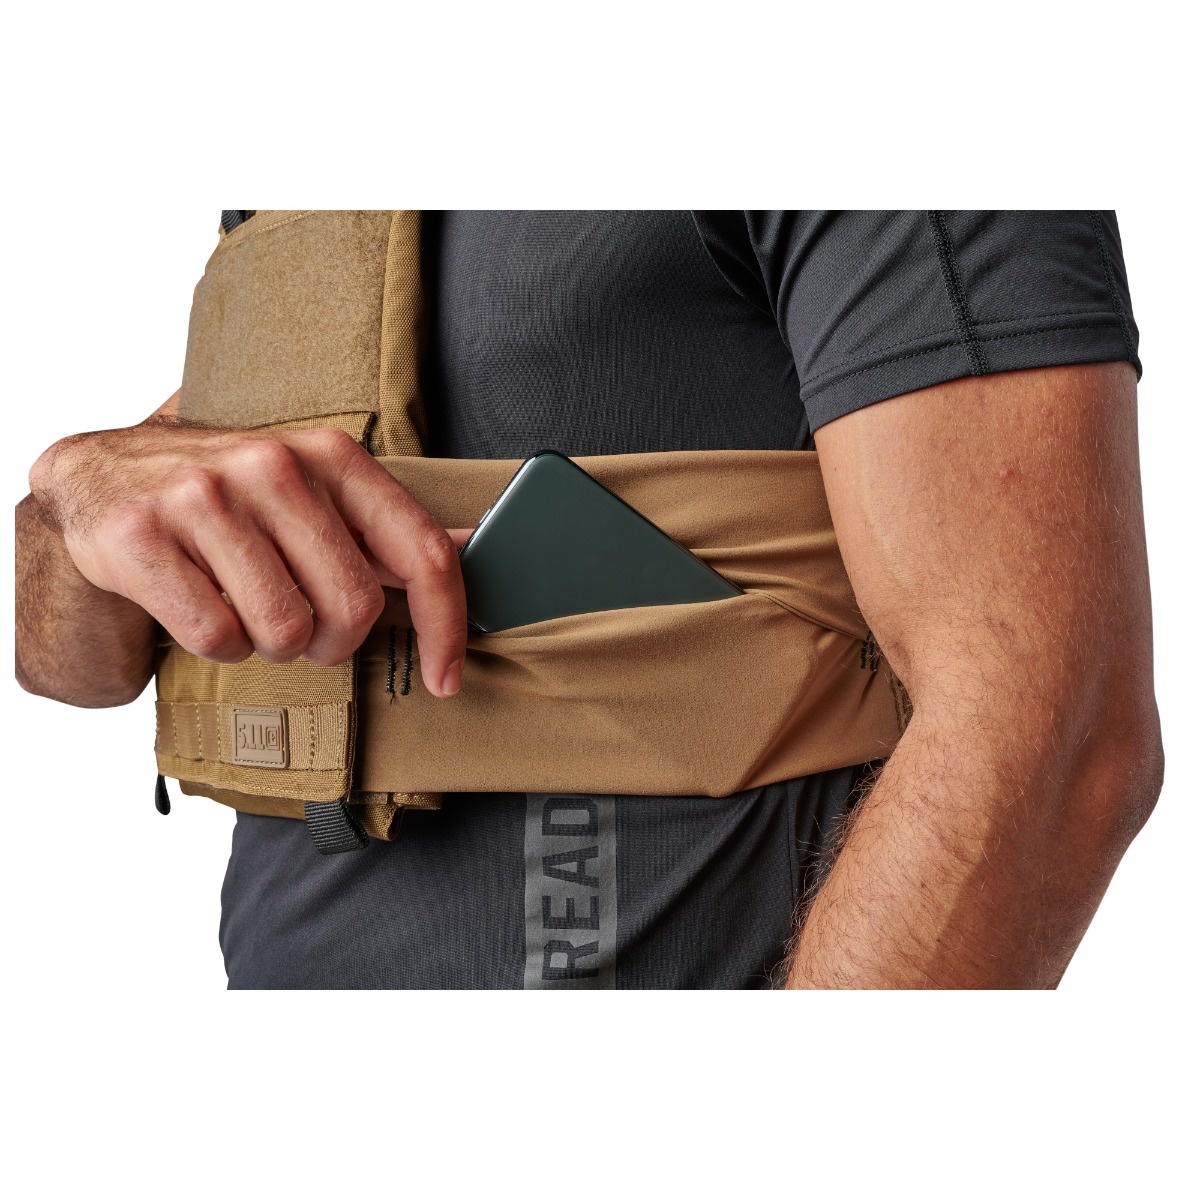 5.11 Tactical - TacTec® Trainer Weight Vest